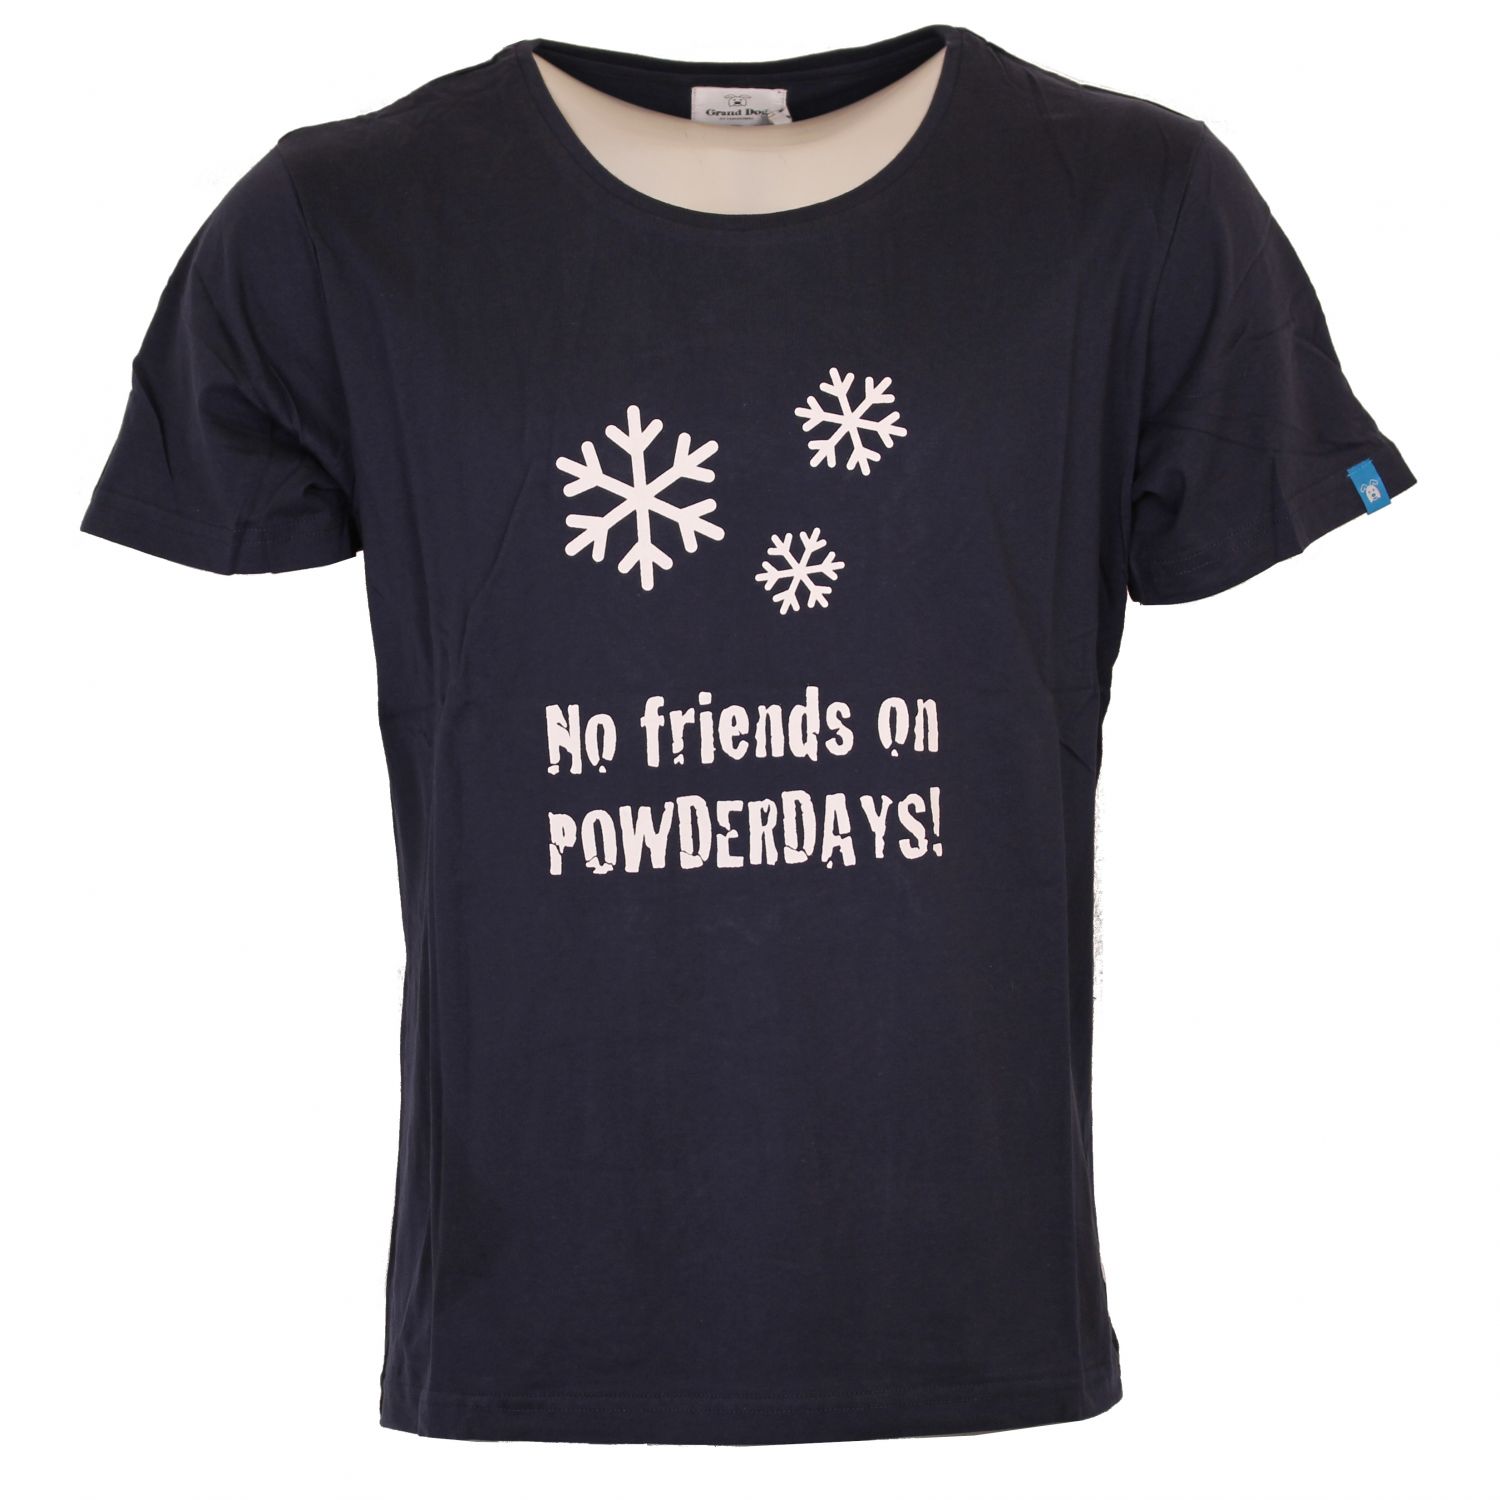 Grand Dog t-shirt, No friends on powderdays, navy